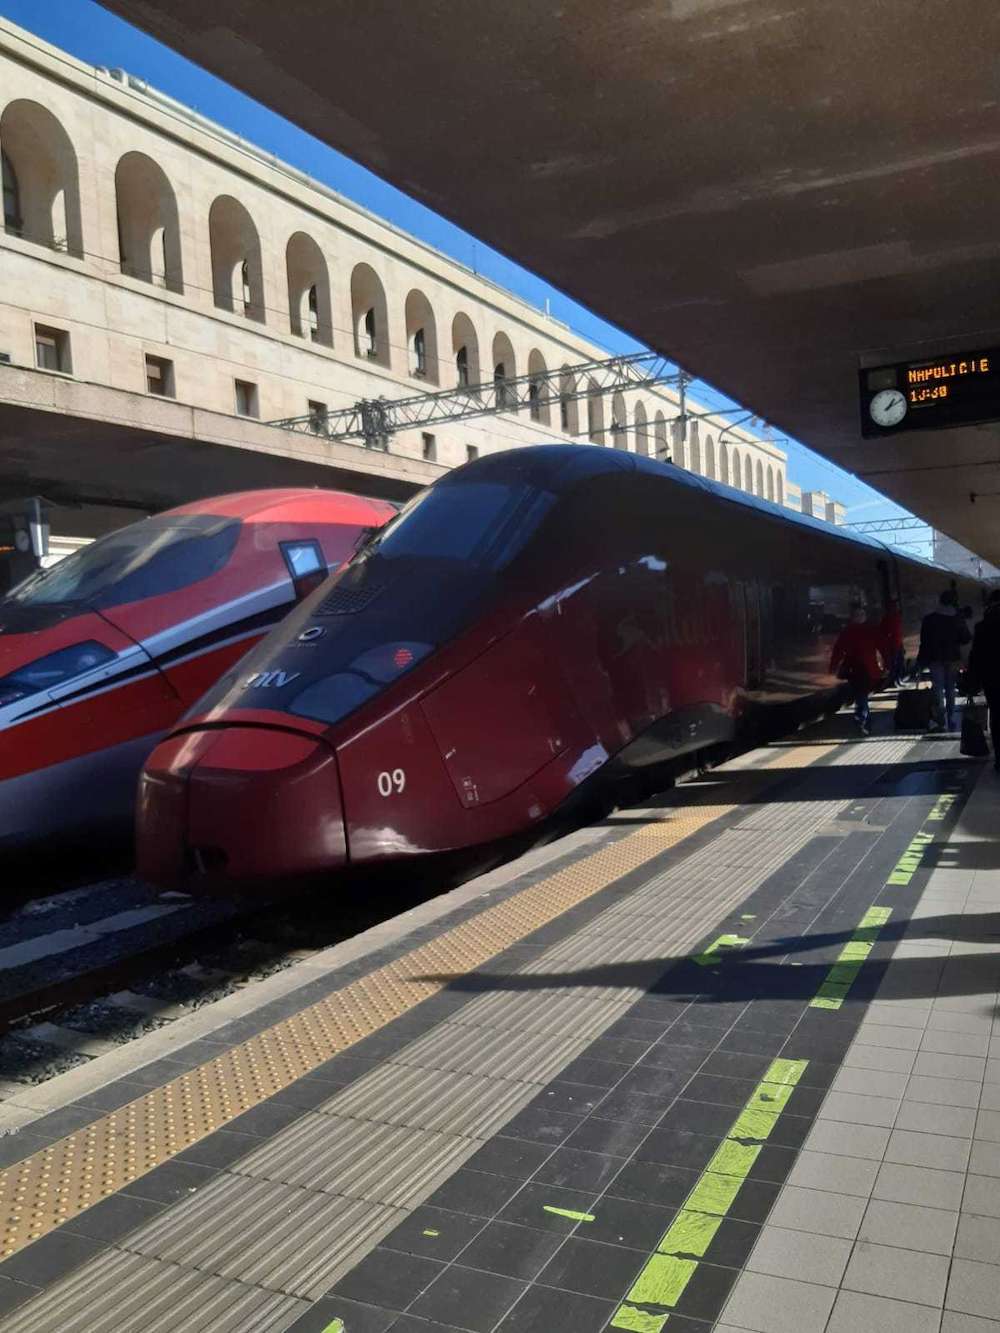 Italo train at platform in Roma Termini station